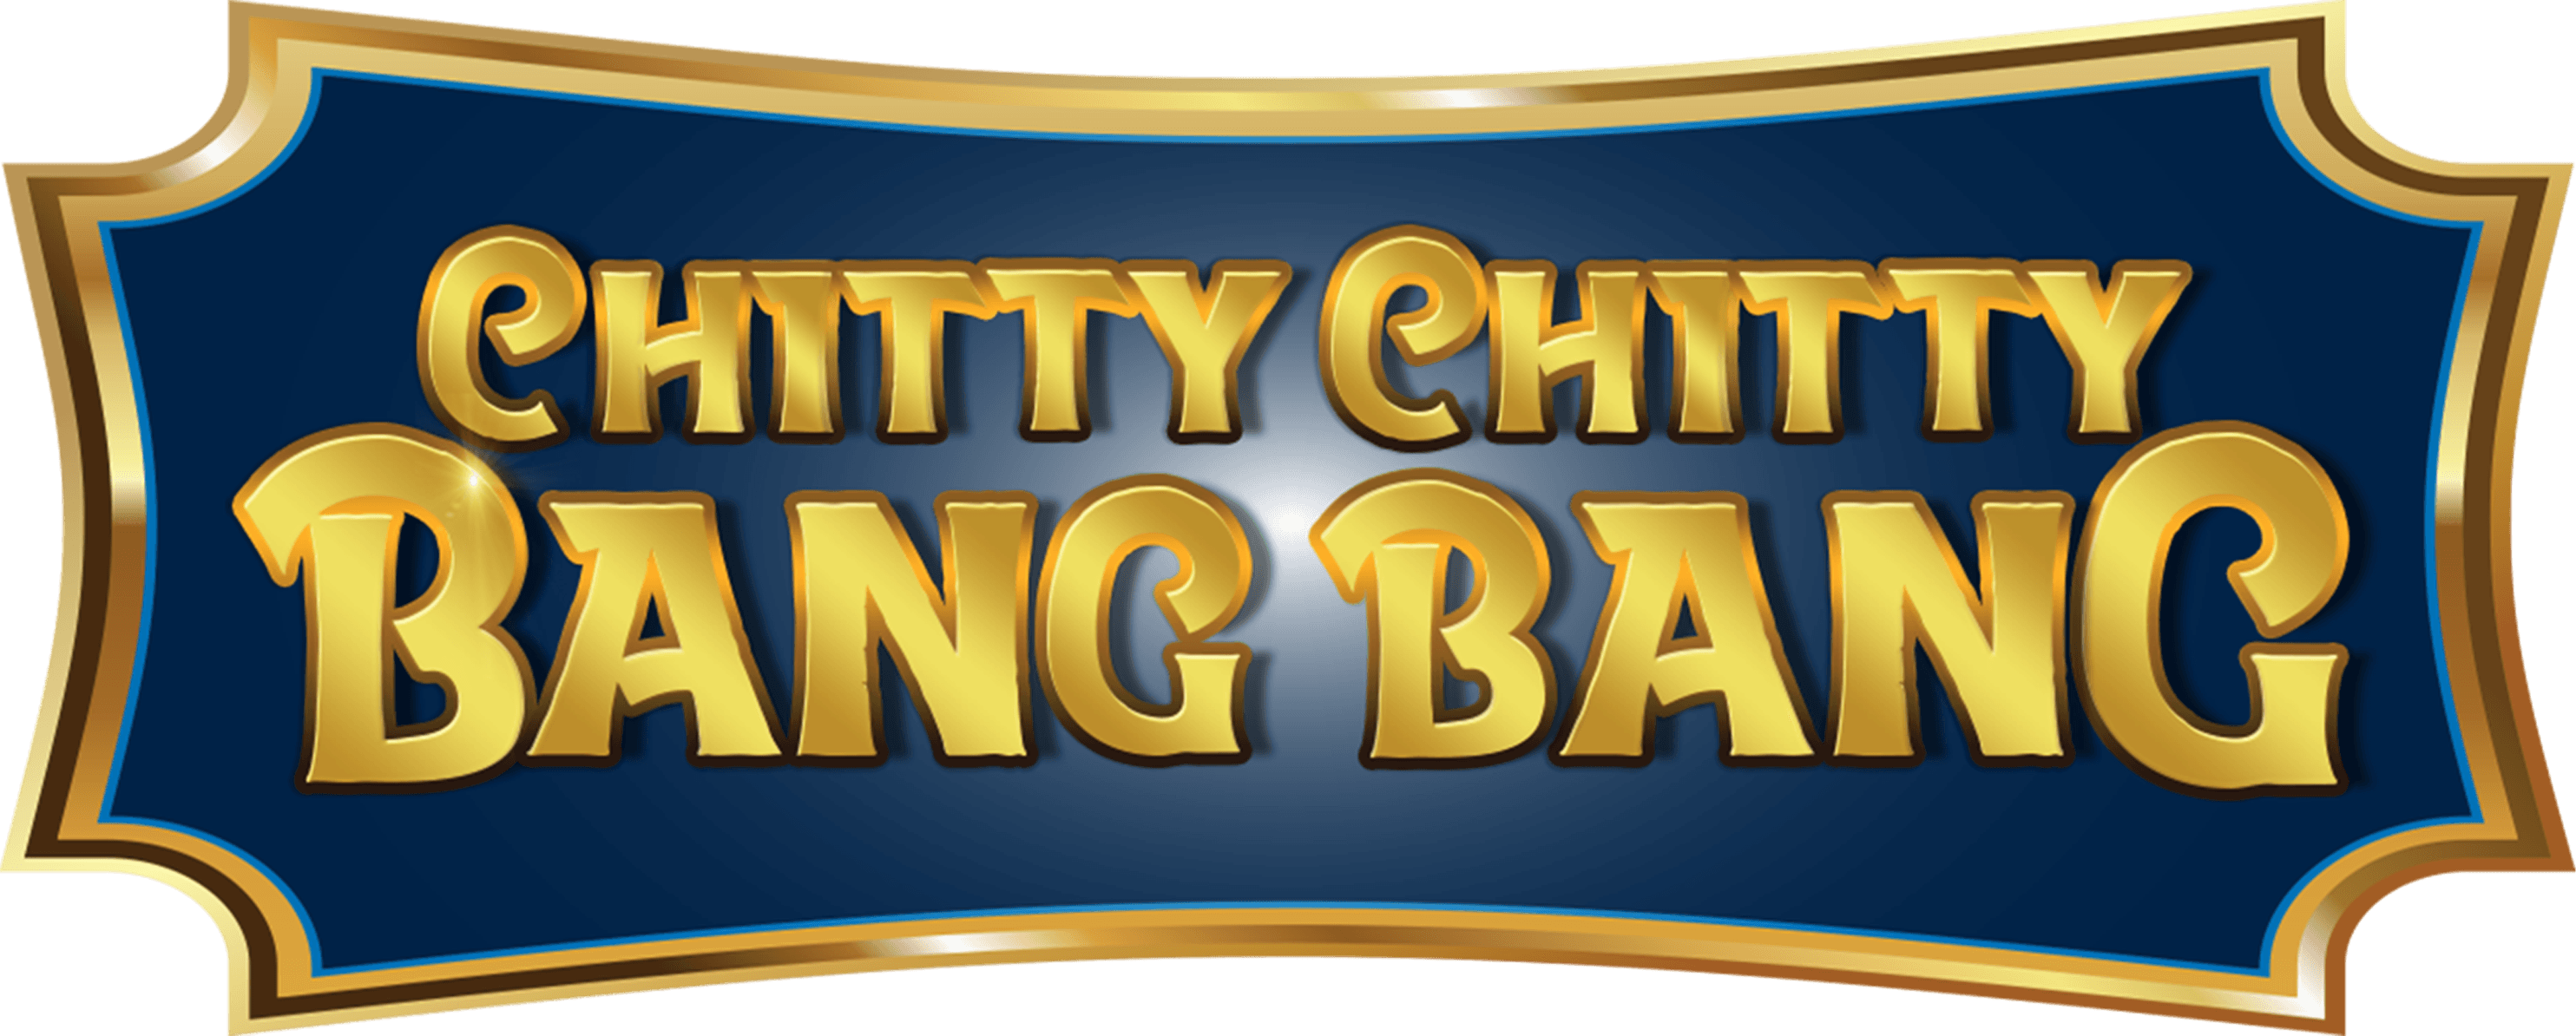 Chitty Chitty Bang Bang logo